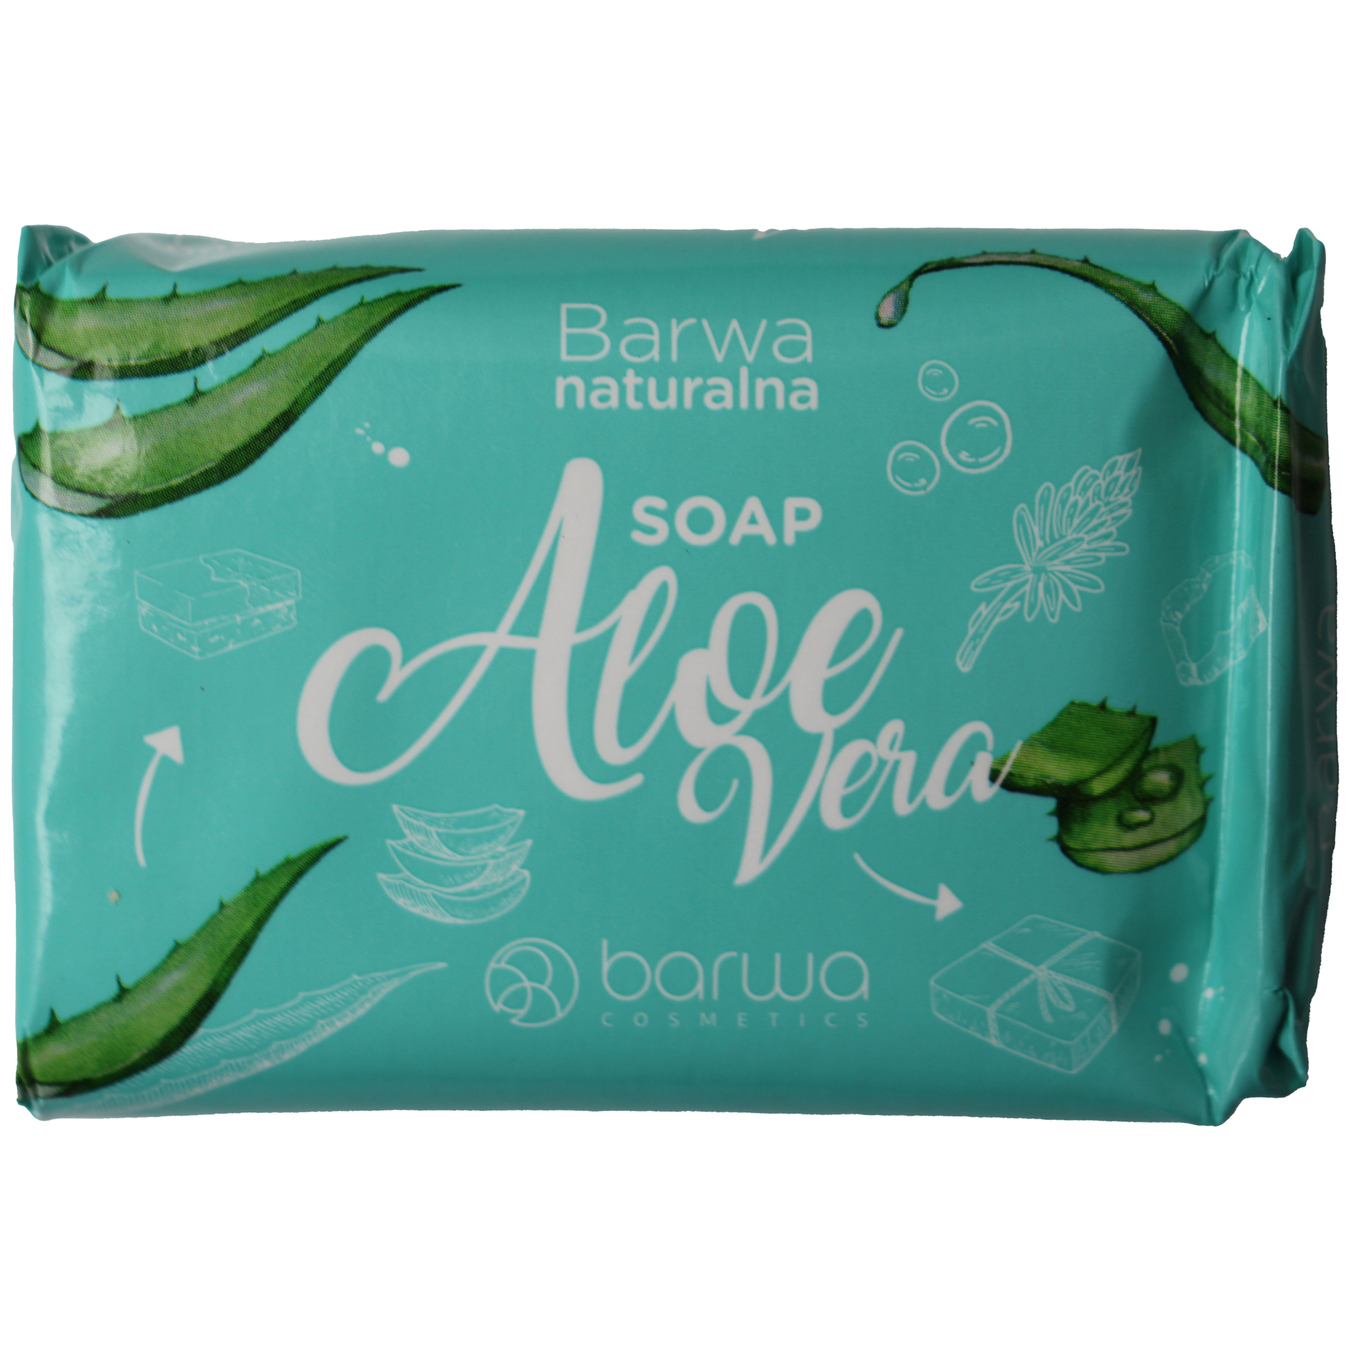 Barwa Naturalna Soap Solid with Aloe Vera 100g